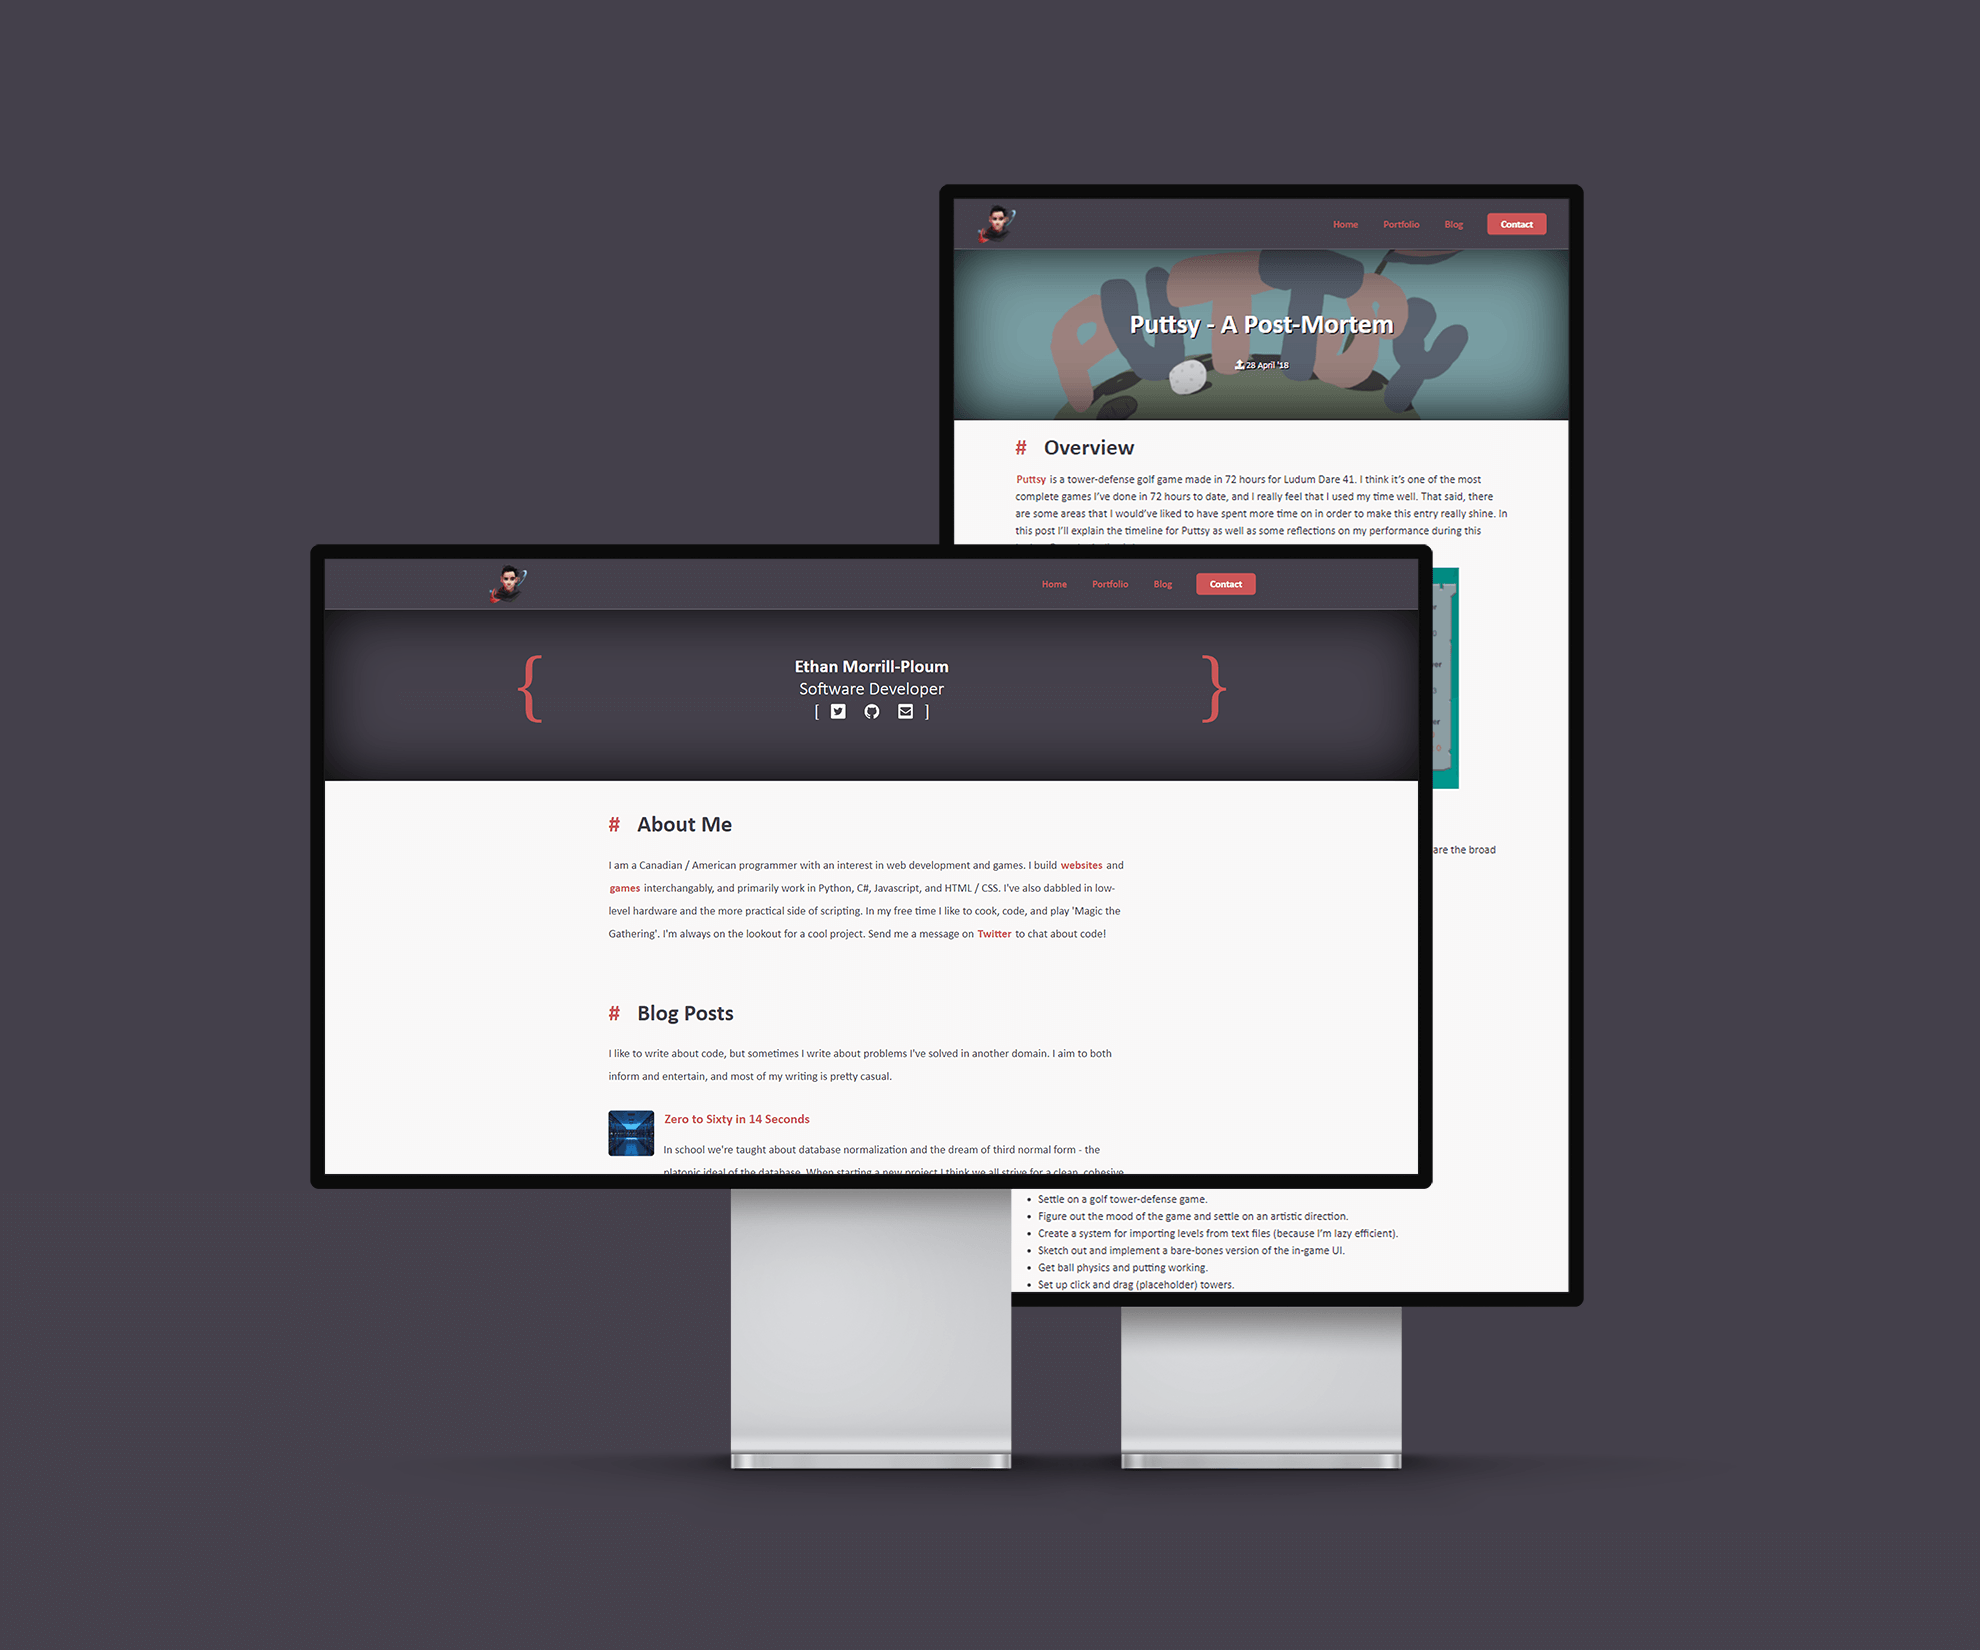 A mockup of the site on desktop displays.